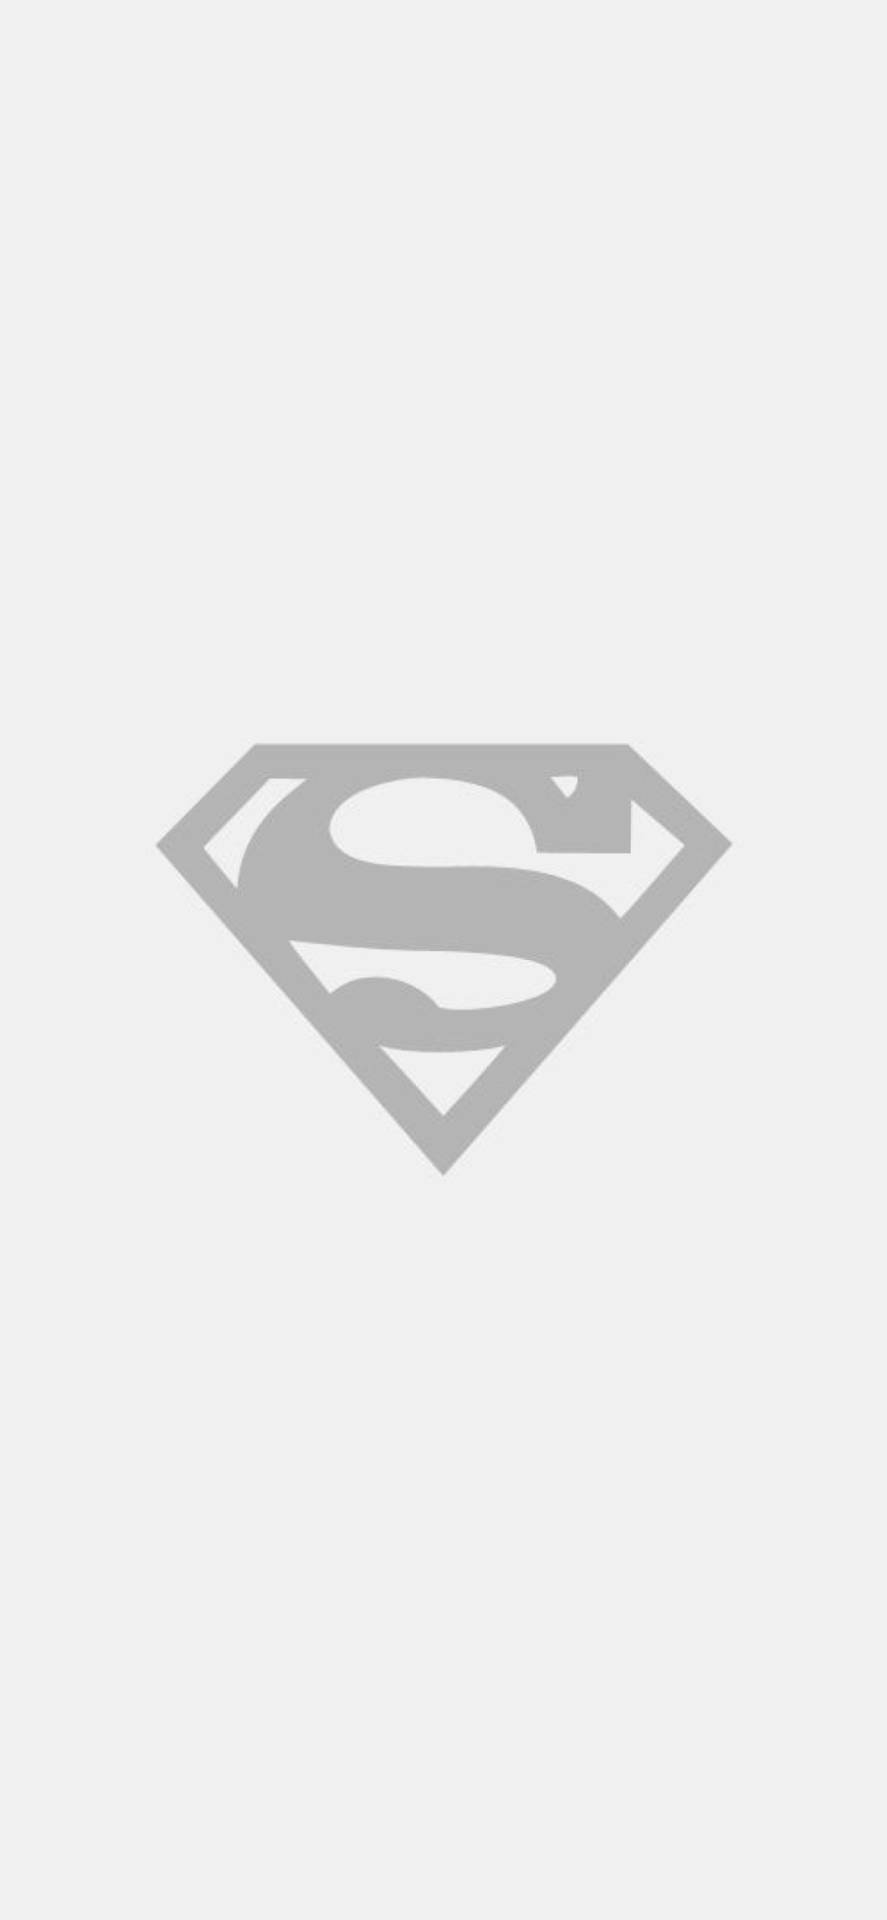 Simple Gray Superman Symbol Iphone